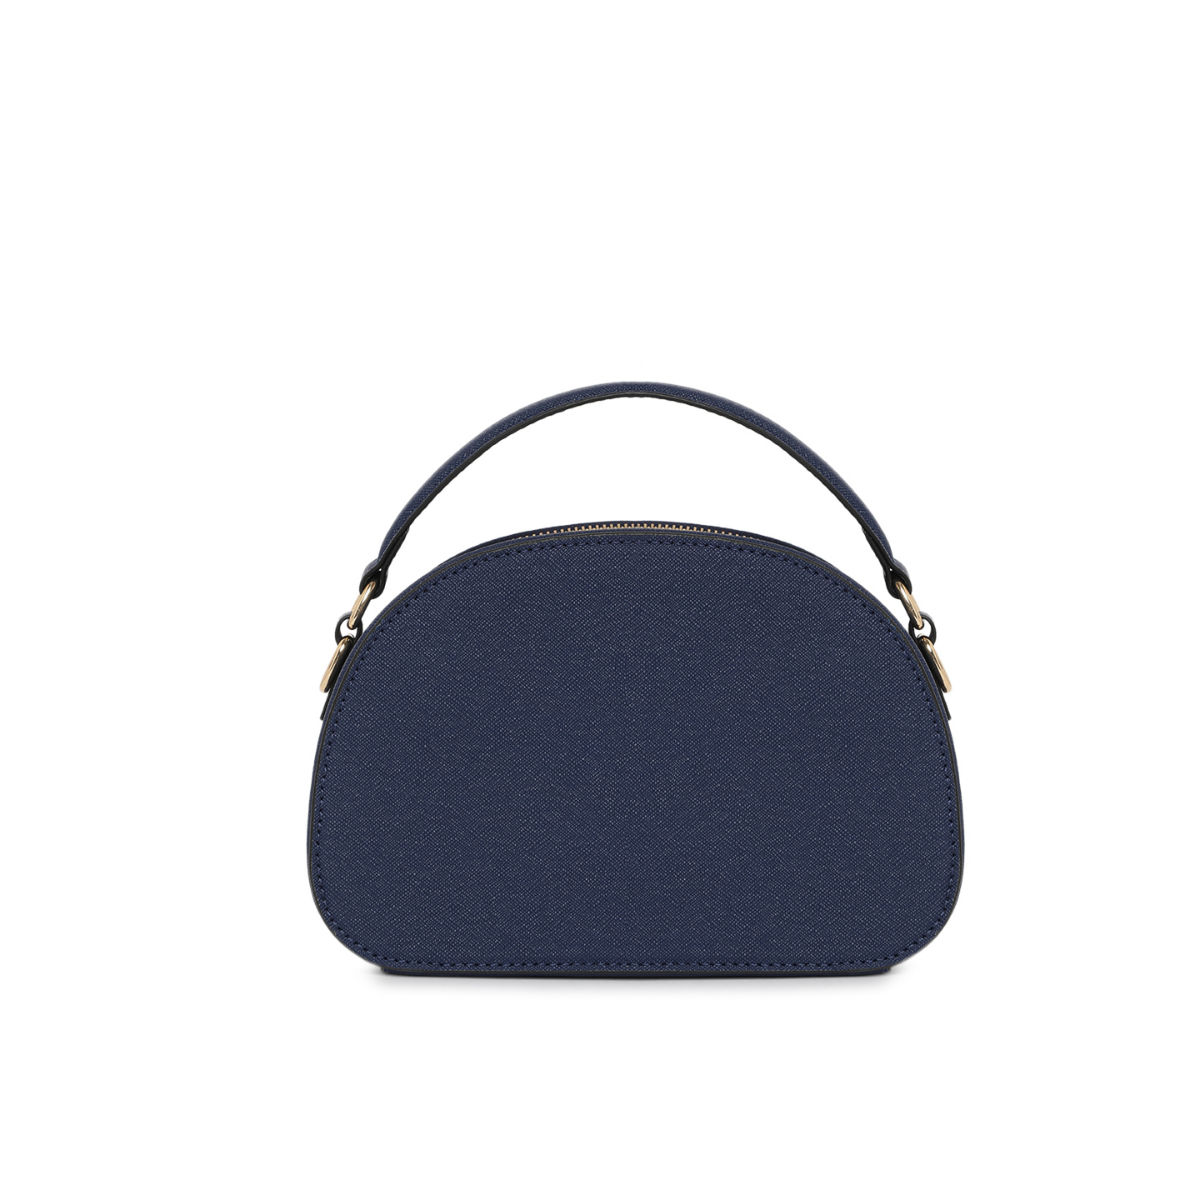 Buy MK PURSE Girls Blue Hand-held Bag BLUE Online @ Best Price in India |  Flipkart.com